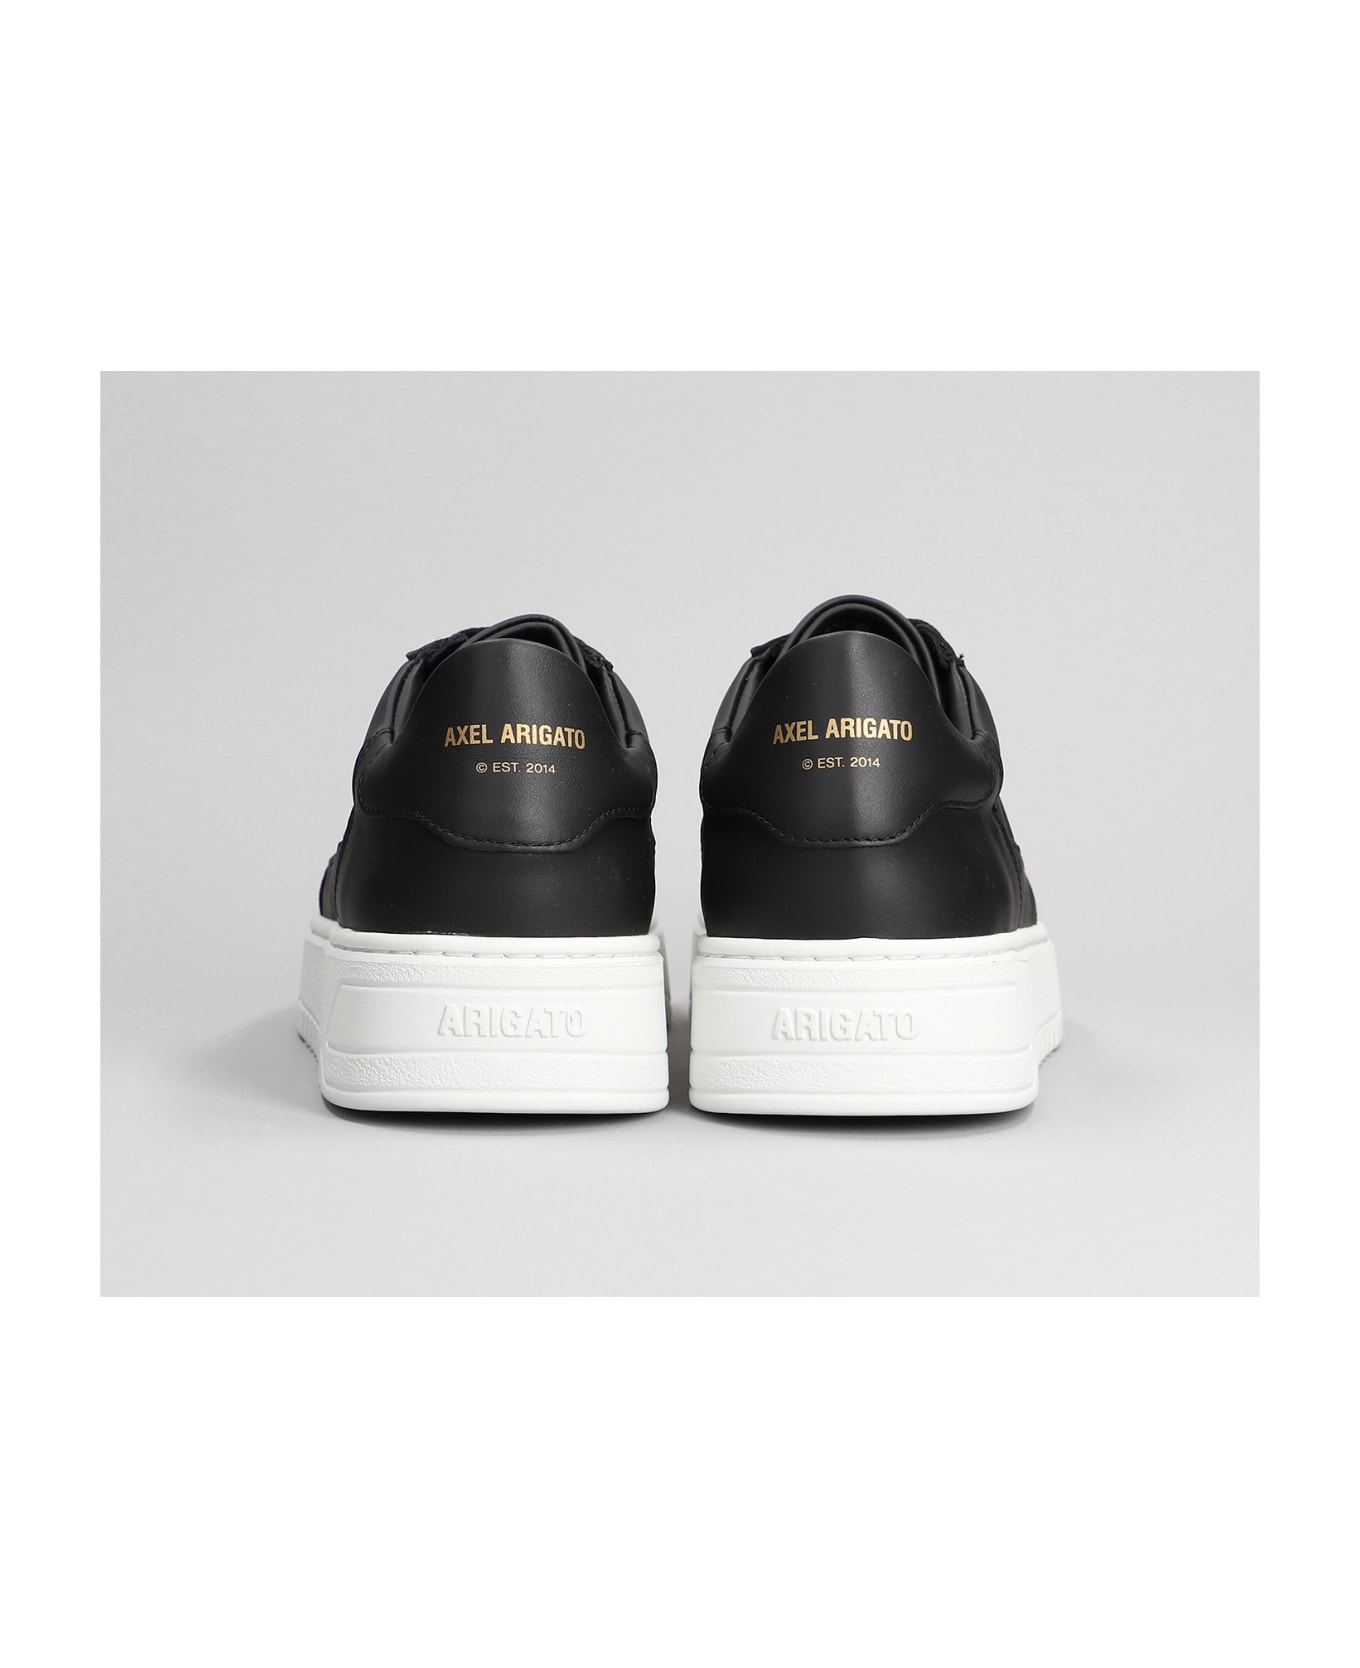 Axel Arigato Orbit Sneakers In Black Leather - black スニーカー